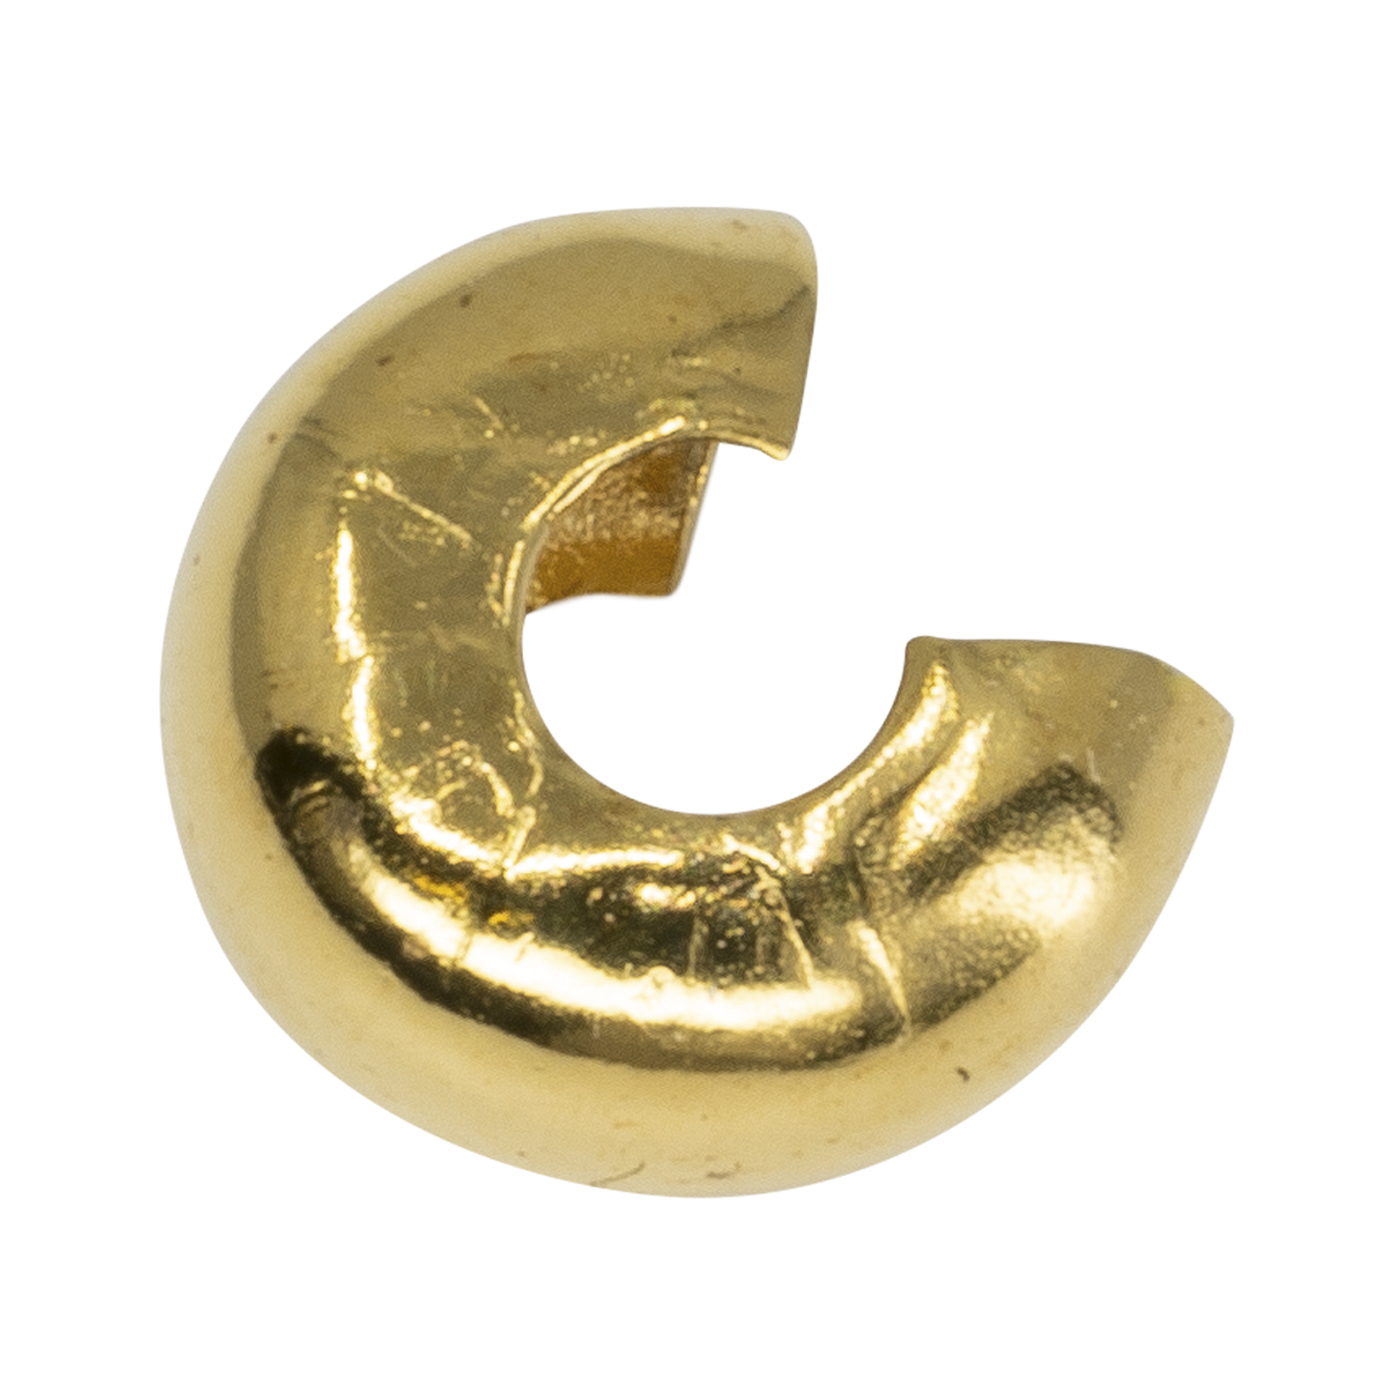 Kaschierperlen, Metall, goldfarben, Außen-ø 5 mm - 50 Stück